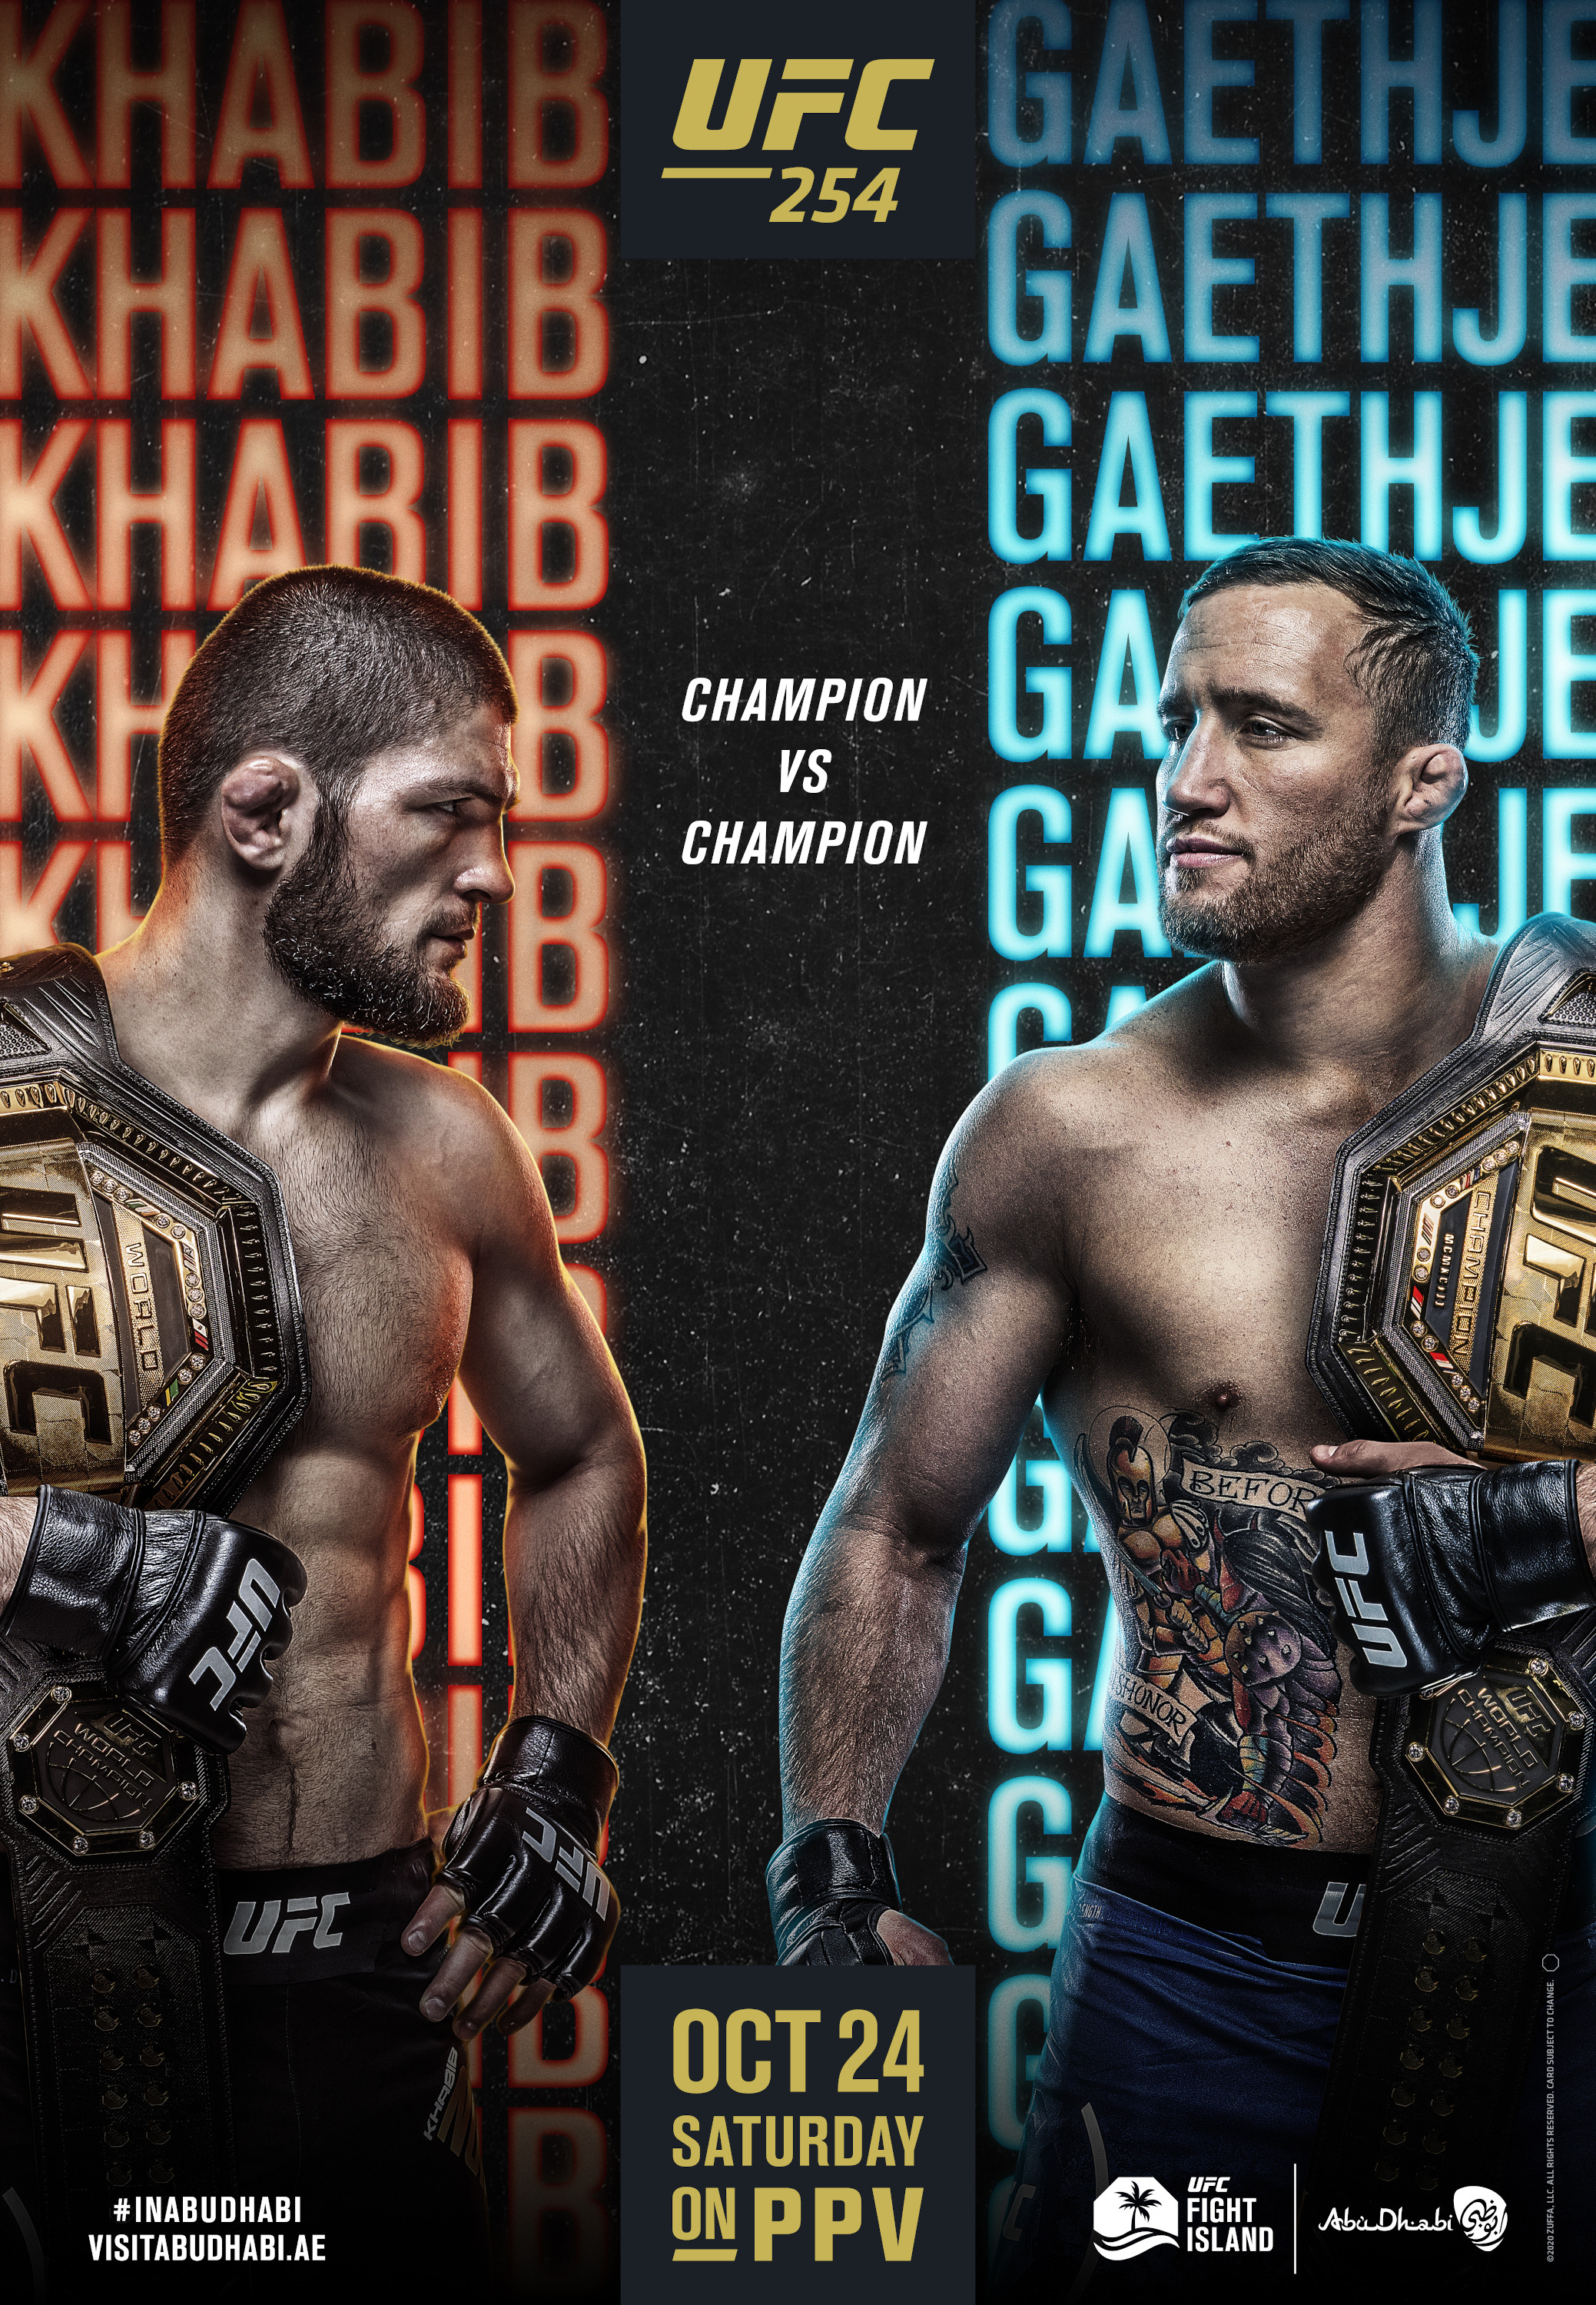 Mega Sized TV Poster Image for UFC 254: Khabib vs. Gaethje 